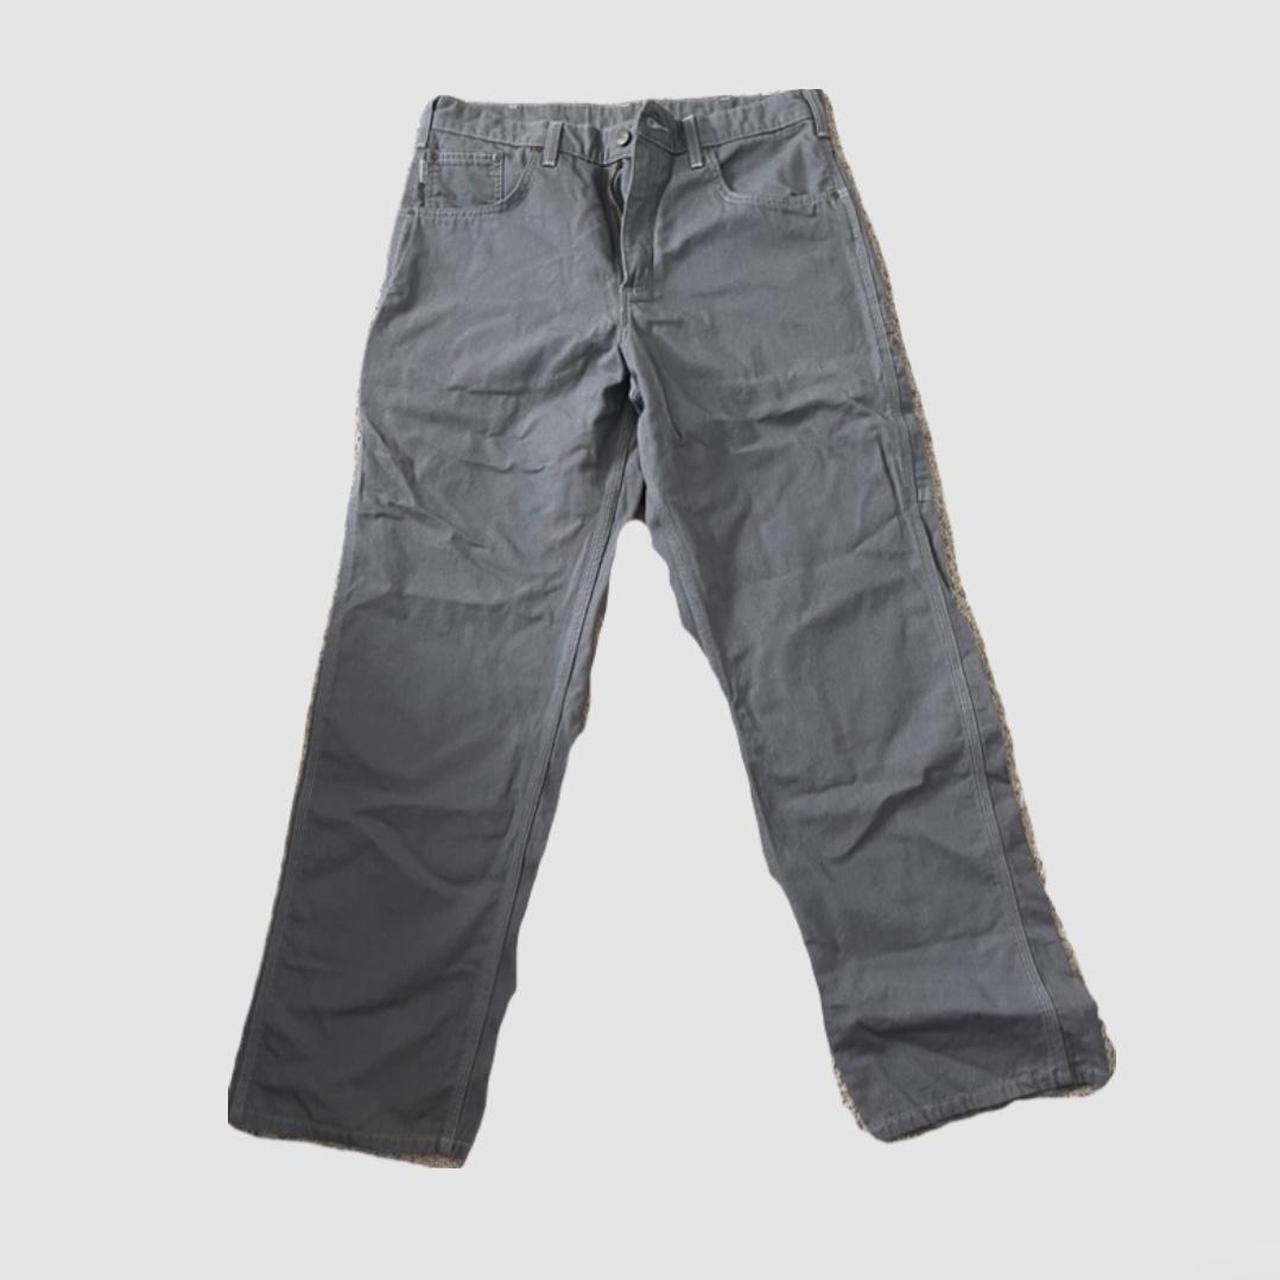 carhart grey cargo pants 34/32 - Depop